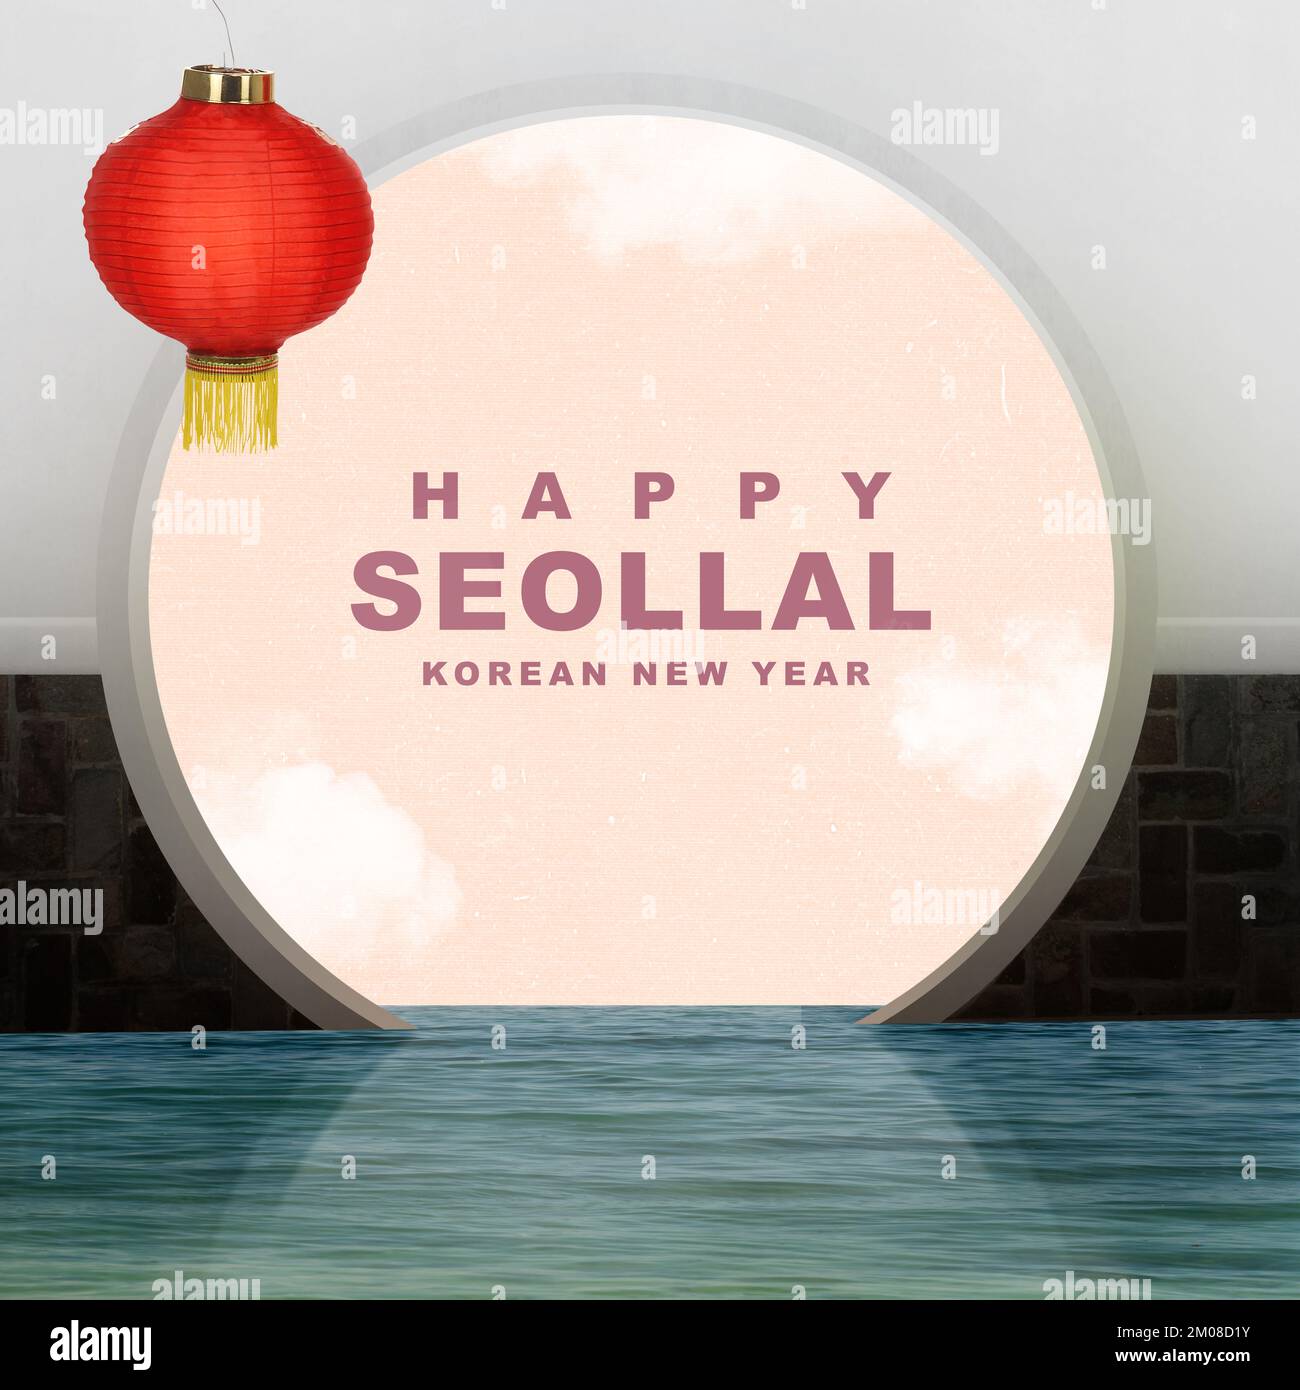 Greetings of Happy Seollal. Happy Korean New Year Stock Photo Alamy